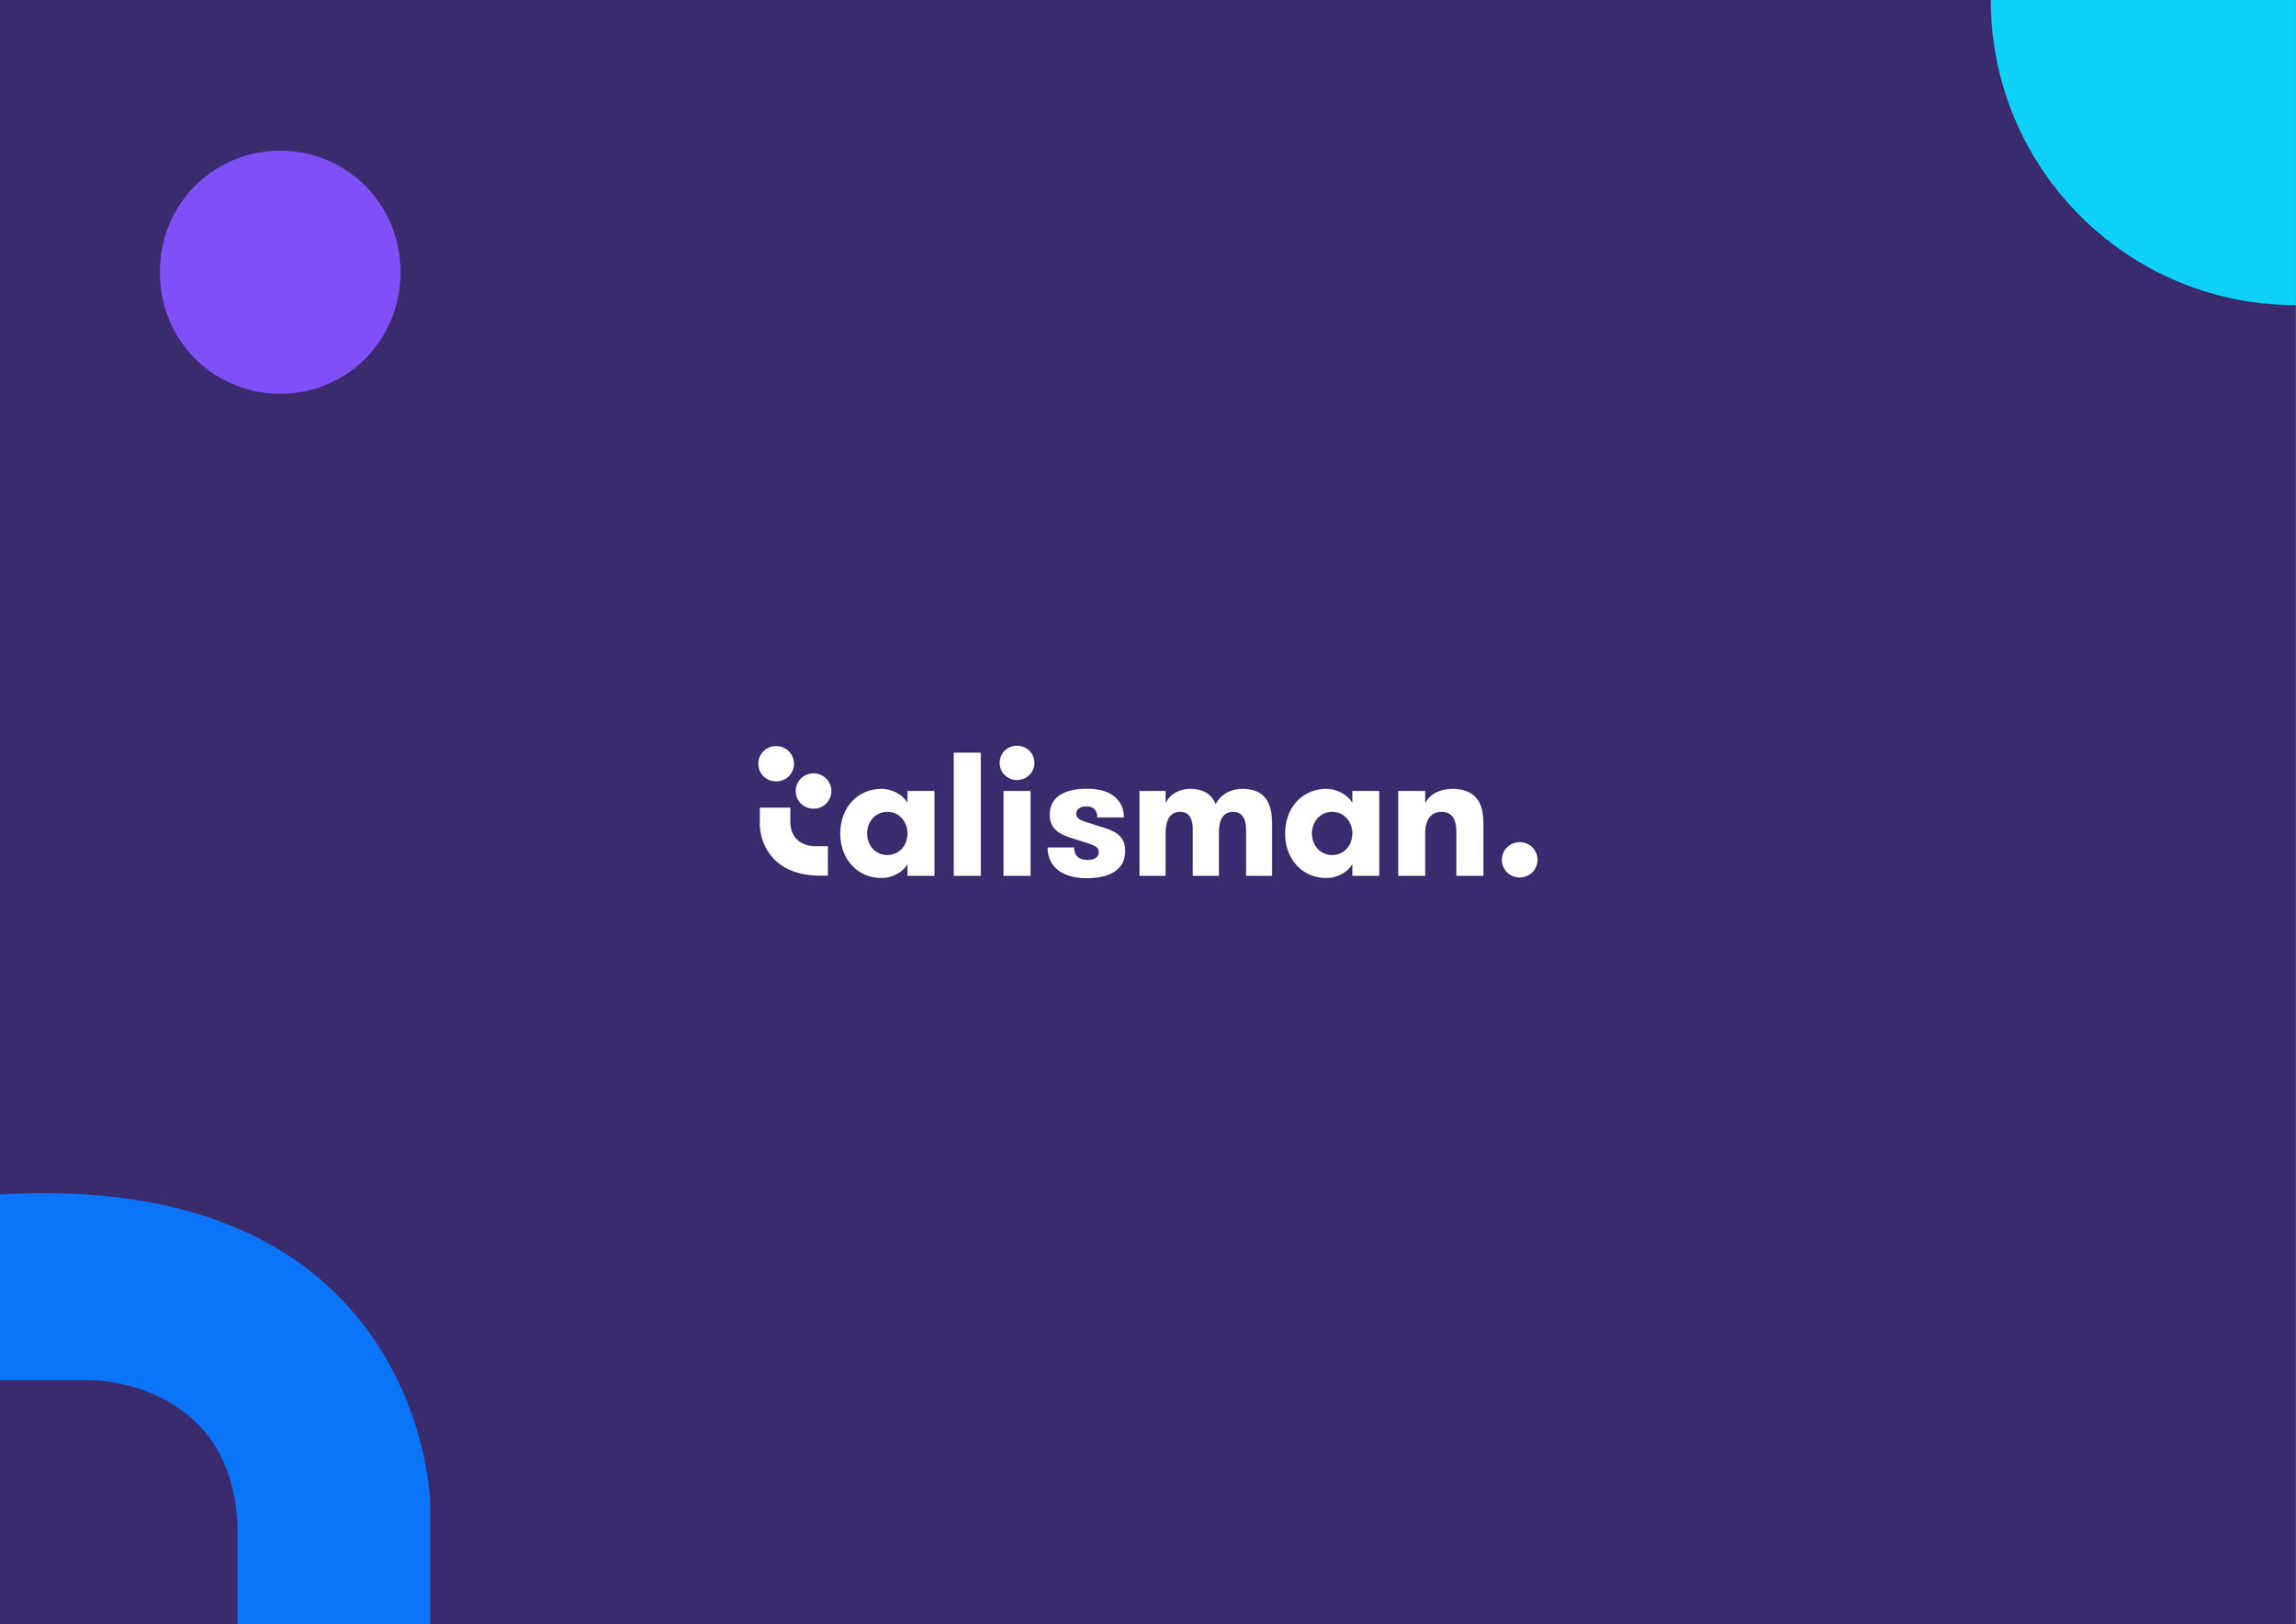 Logo Designer UK - Talisman company font logo in purple background